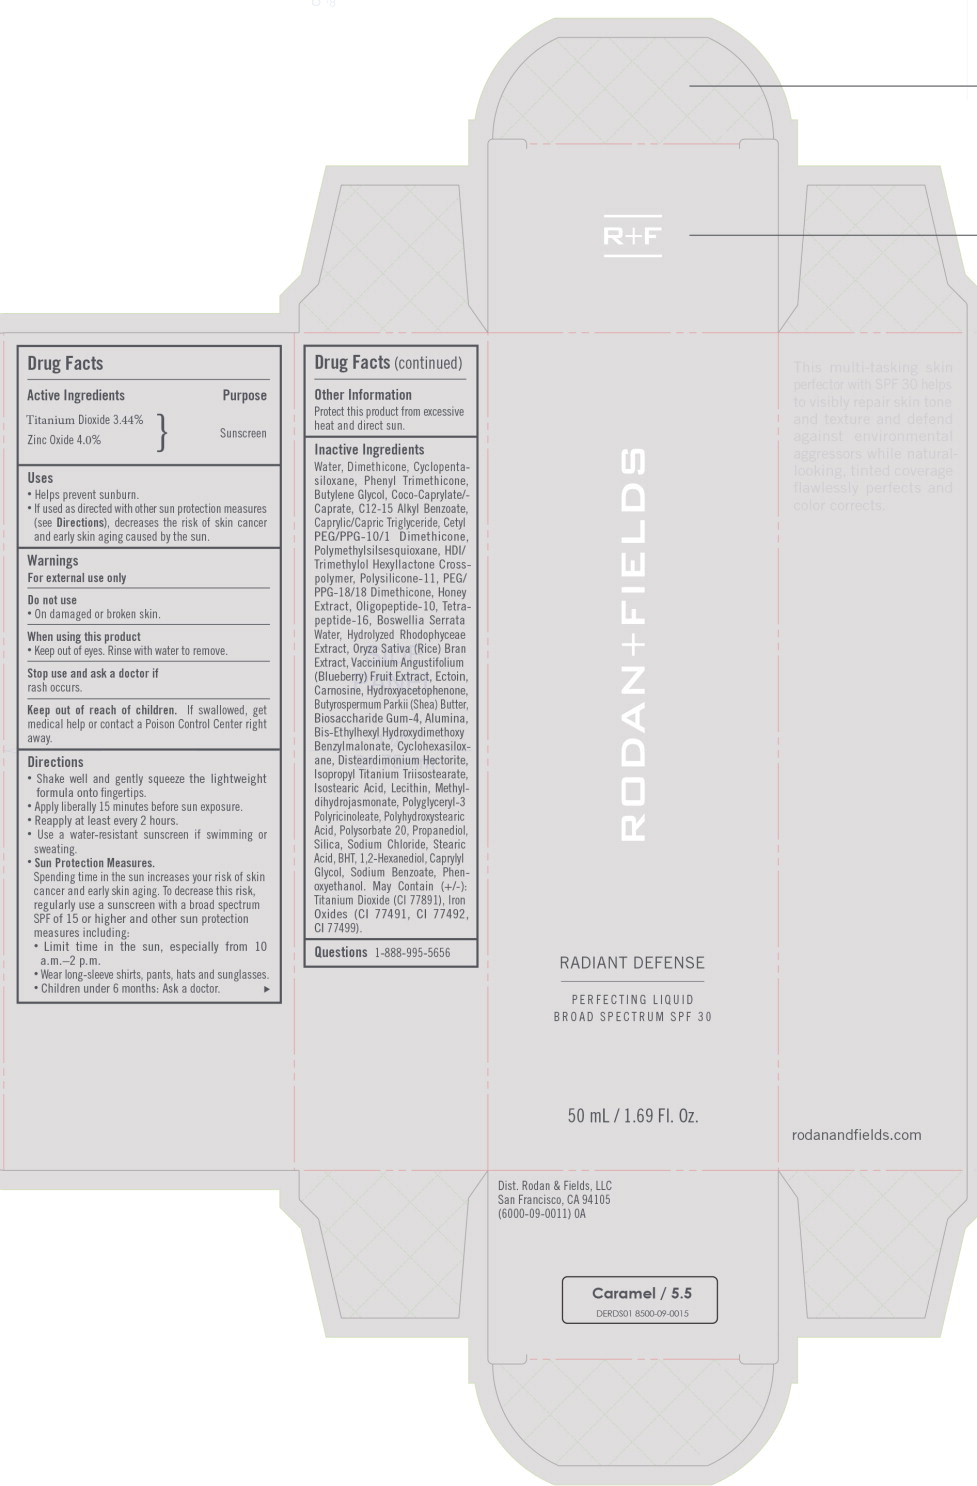 Principal Display Panel – 50 mL Caramel Box Label
